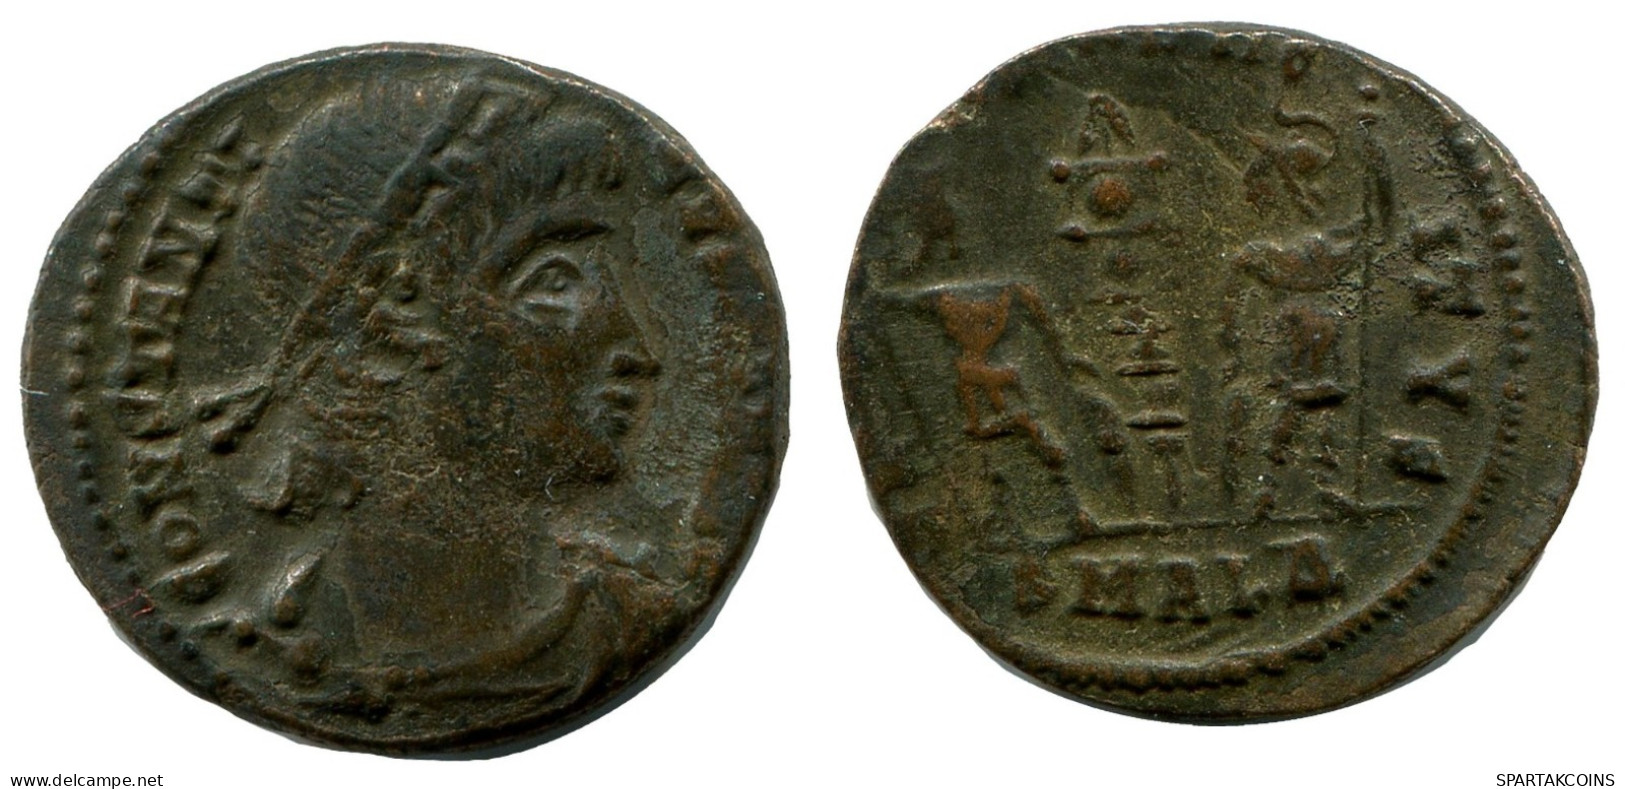 CONSTANTIUS II ALEKSANDRIA FROM THE ROYAL ONTARIO MUSEUM #ANC10464.14.D.A - Der Christlischen Kaiser (307 / 363)